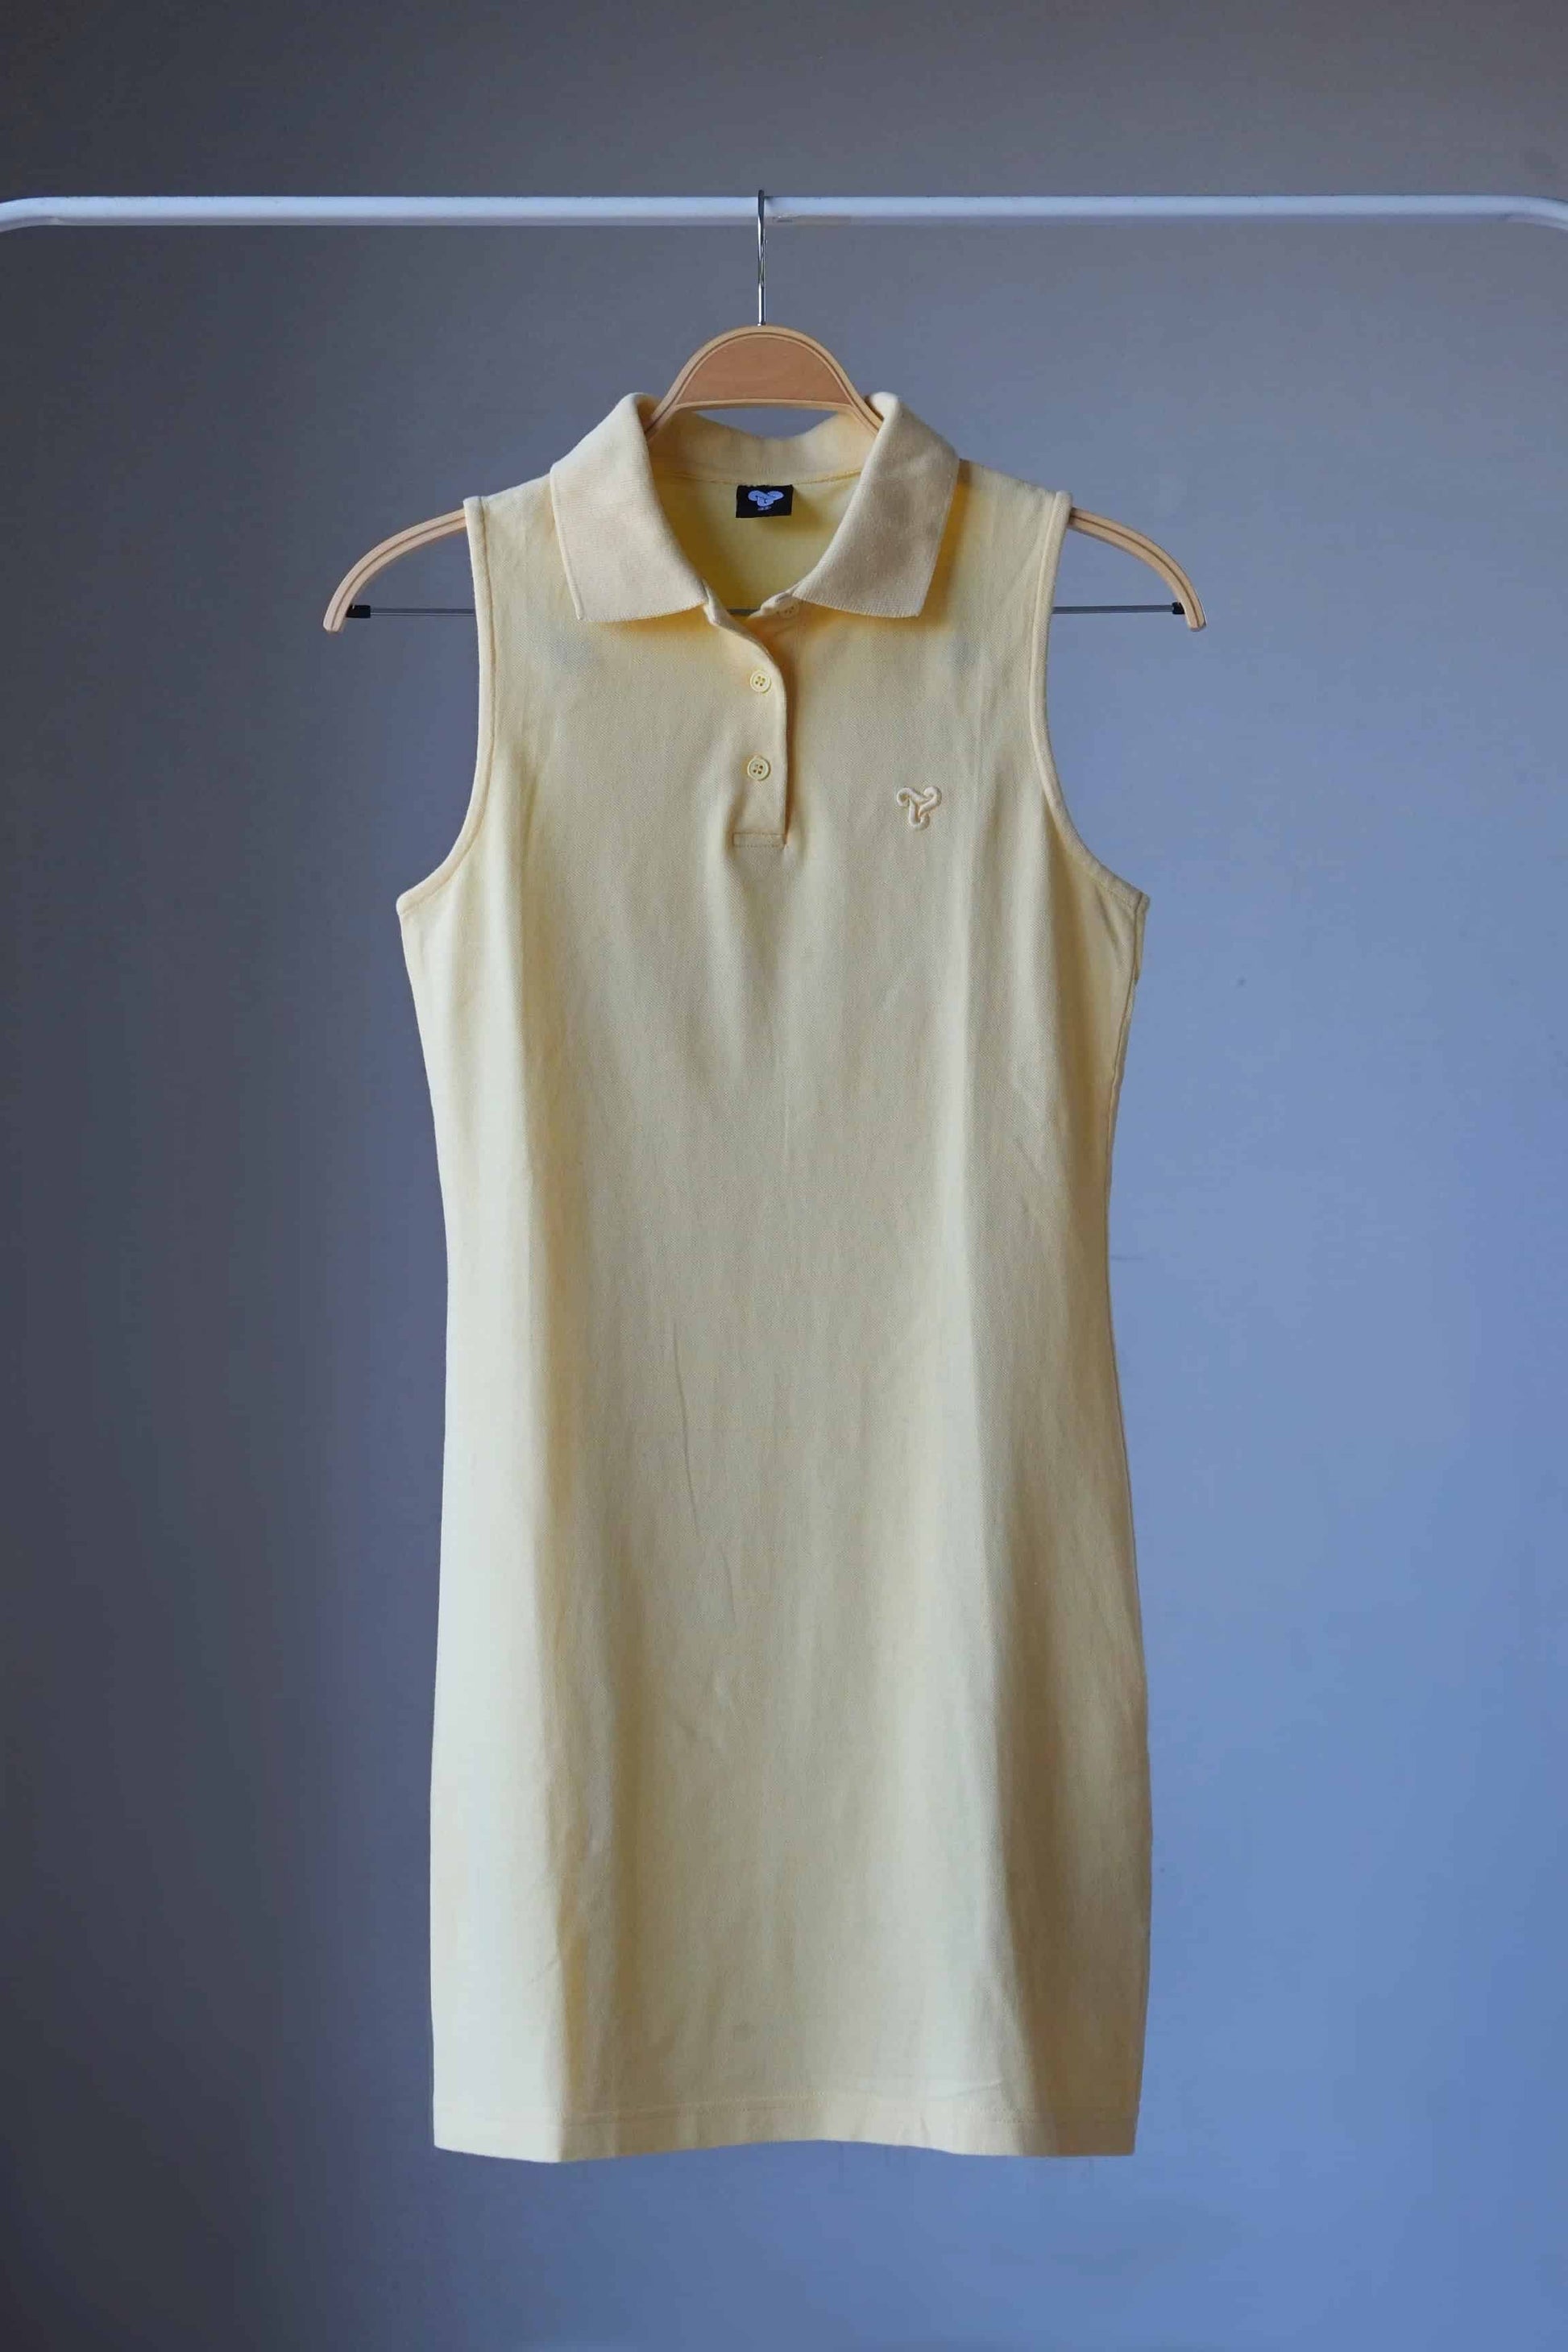 BRUGI 90's Polo Shirt Dress yellow